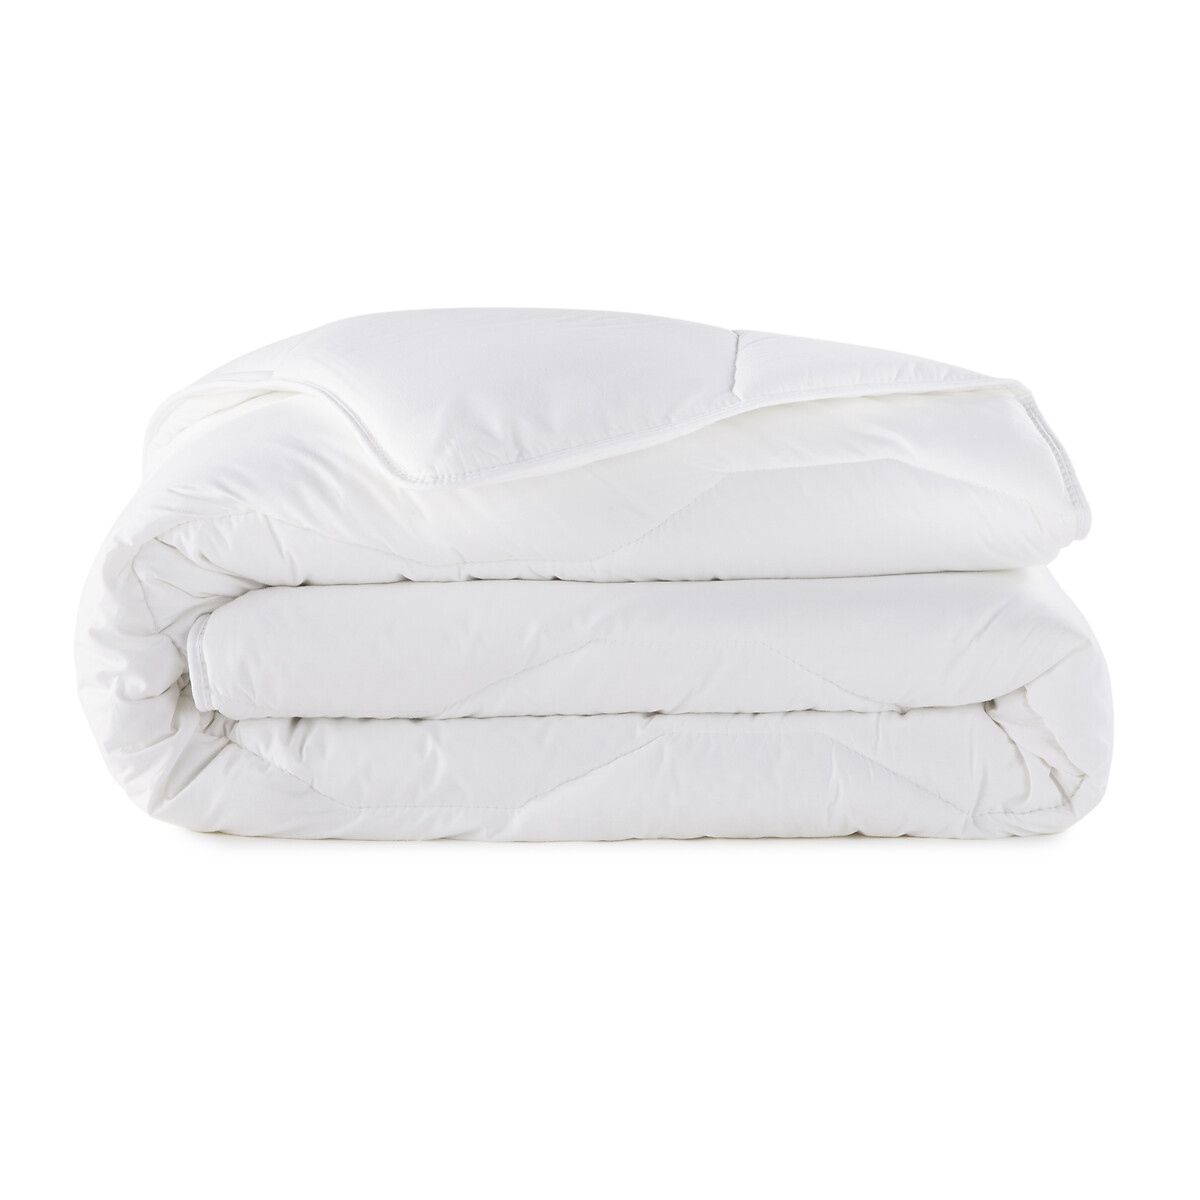 Одеяло La Redoute Из синтетикиPrestige Hollofil среднее качество  гм 260 x 240 см белый, размер 260 x 240 см - фото 2